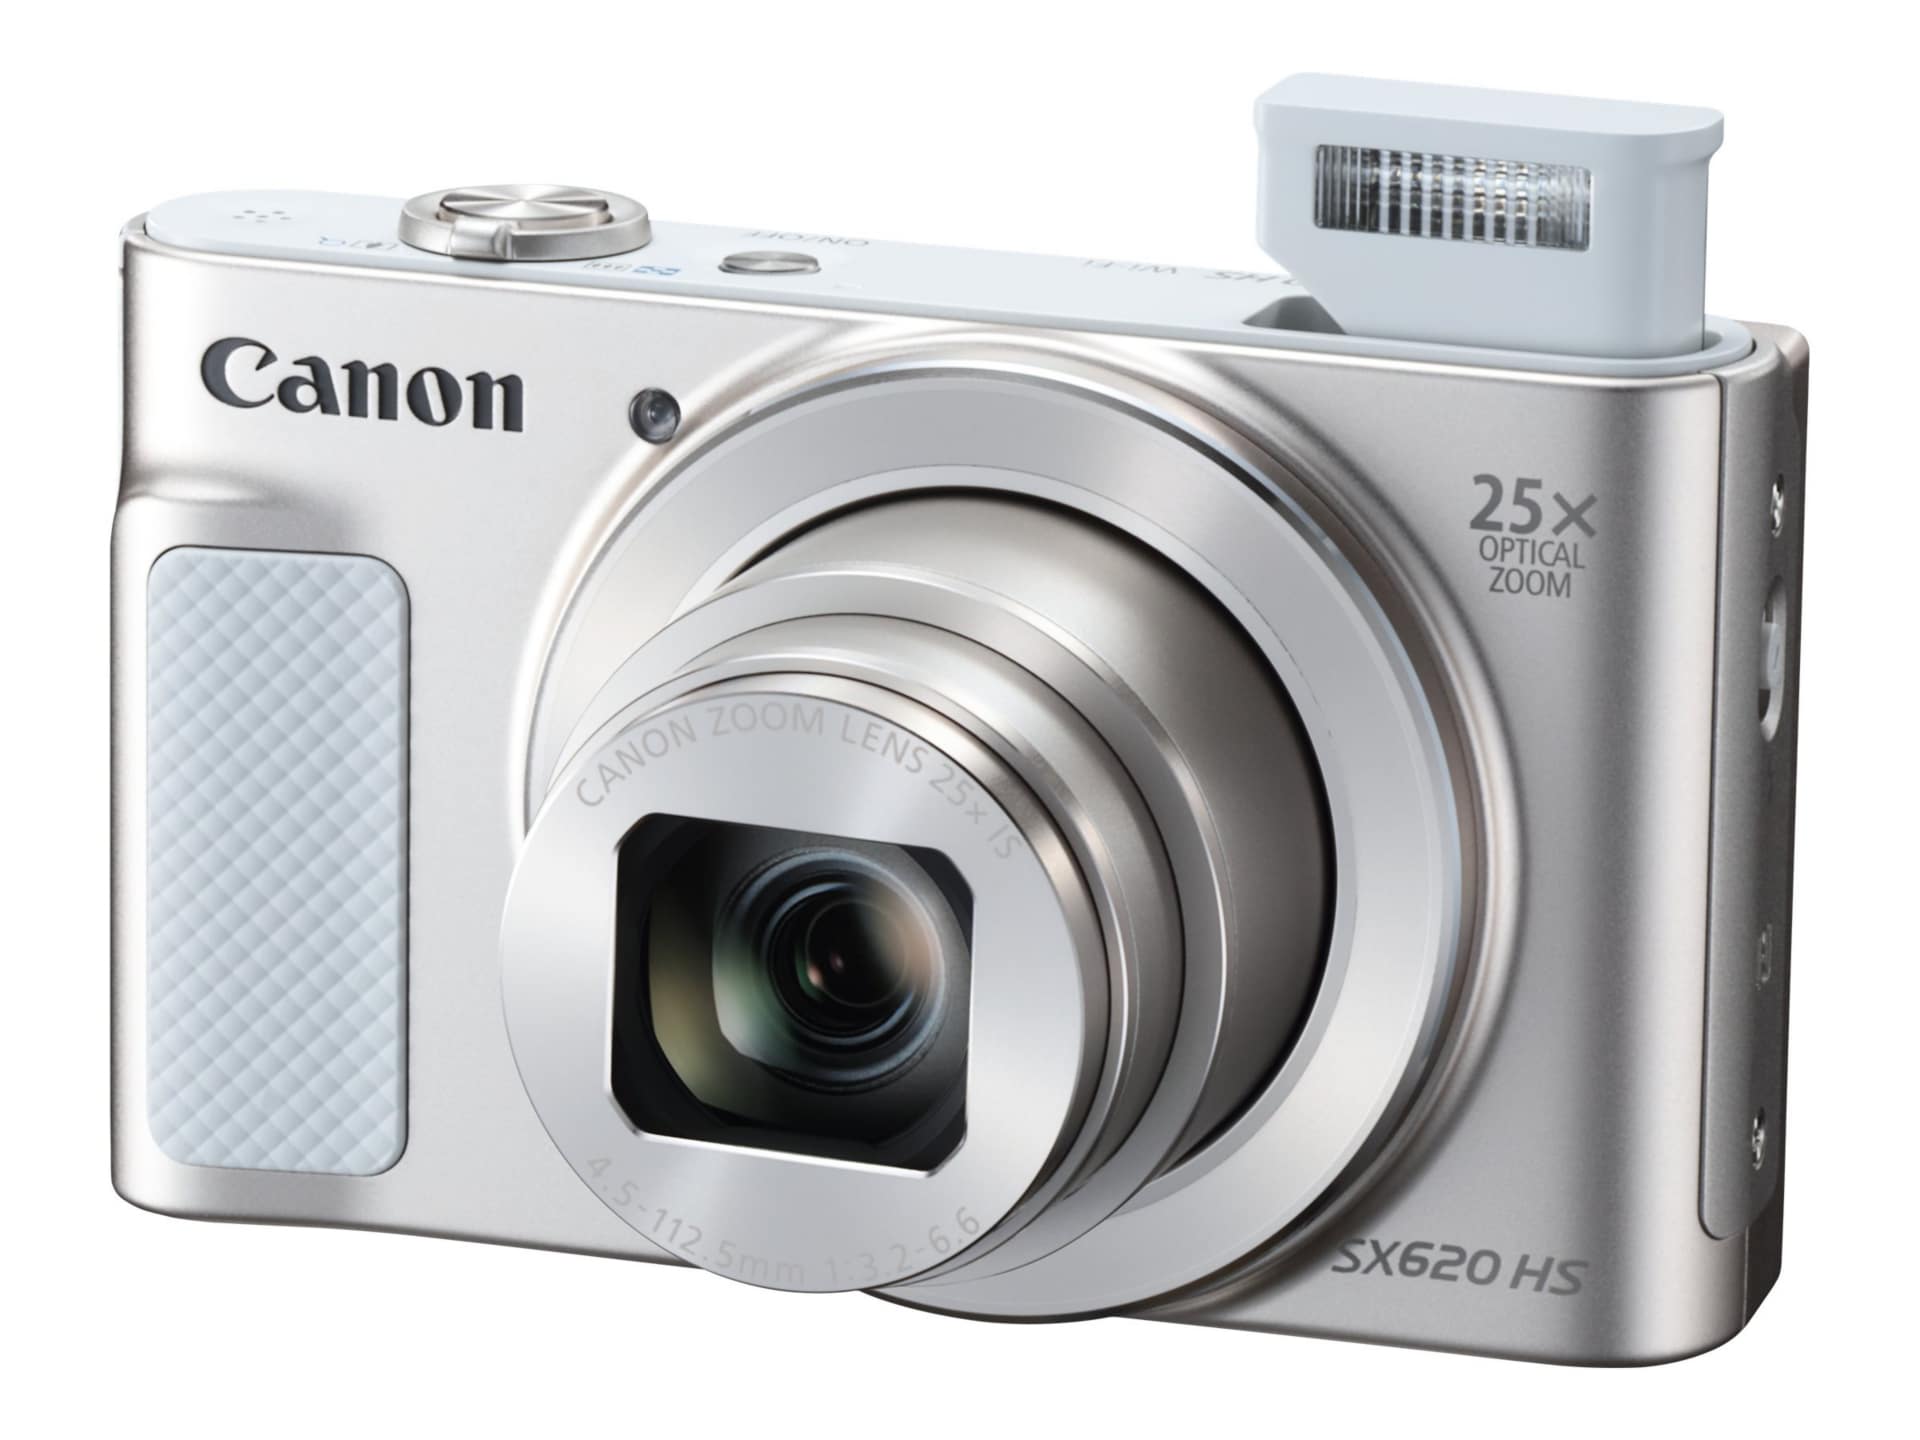 Canon PowerShot SX620 HS - digital camera